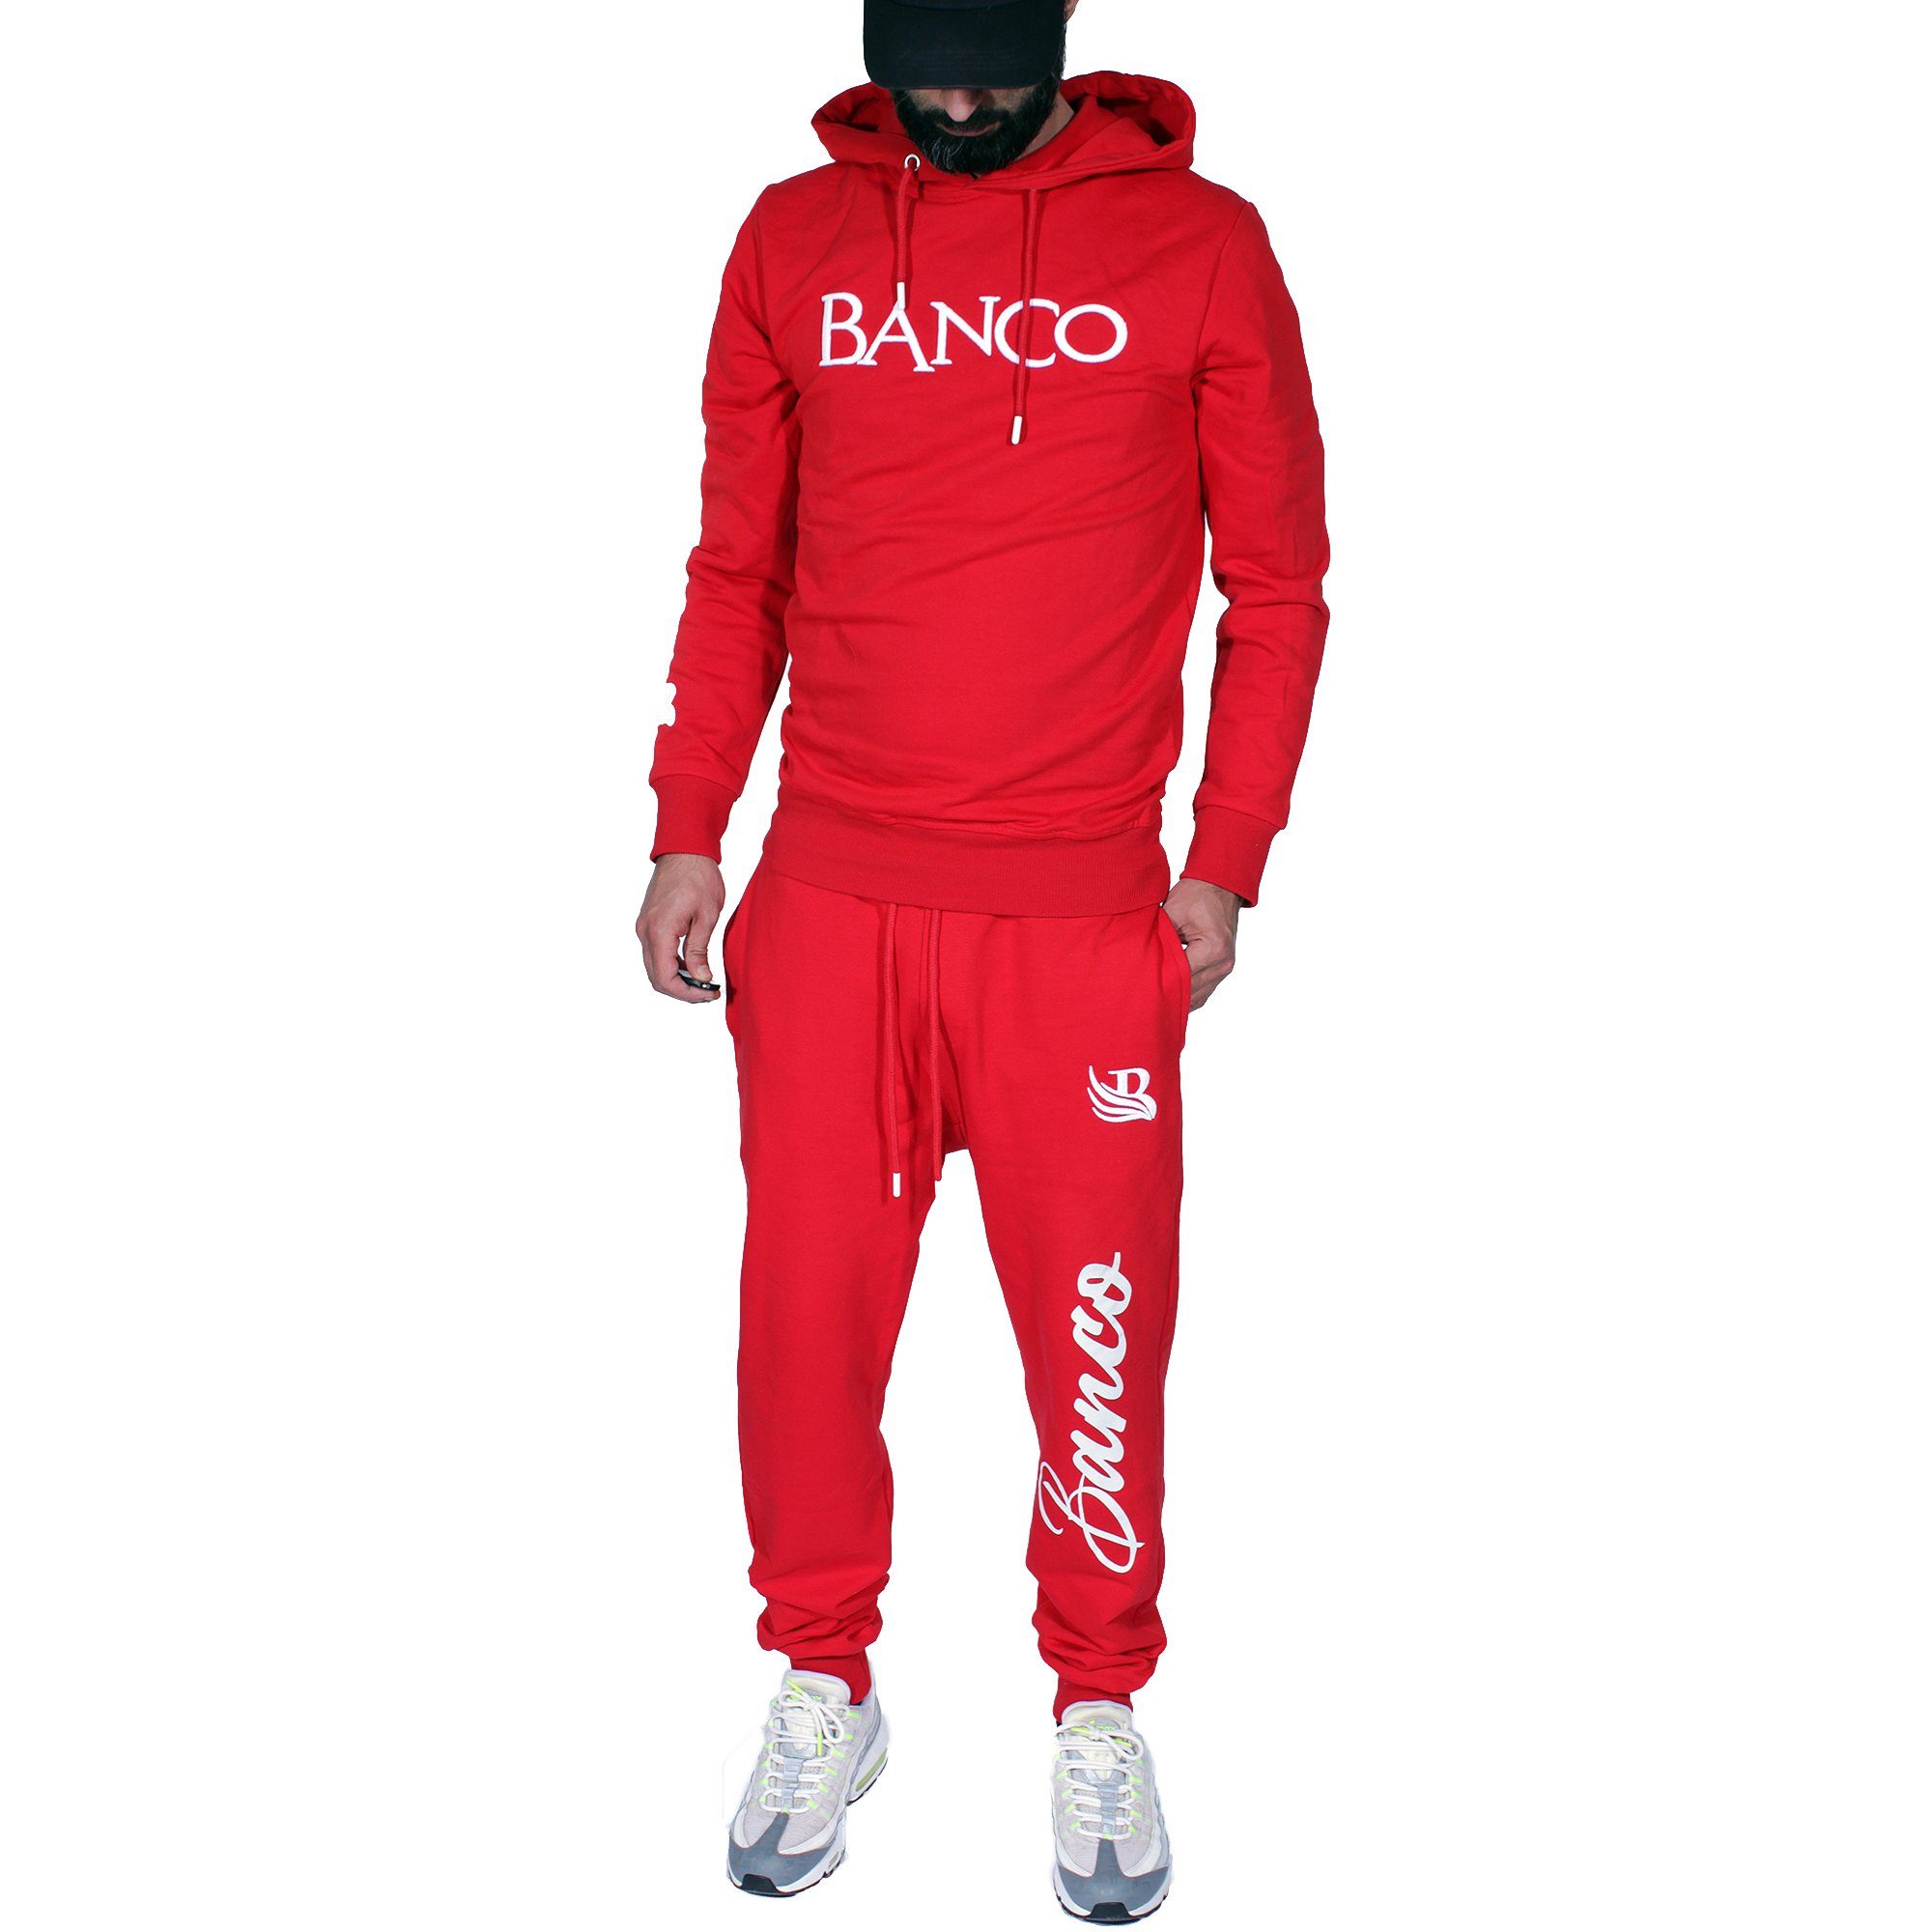 Banco Freizeitanzug Banco Sportanzug mit Logo Streetwear Outdoor Fitness Herren, Mit Kapuze Rot